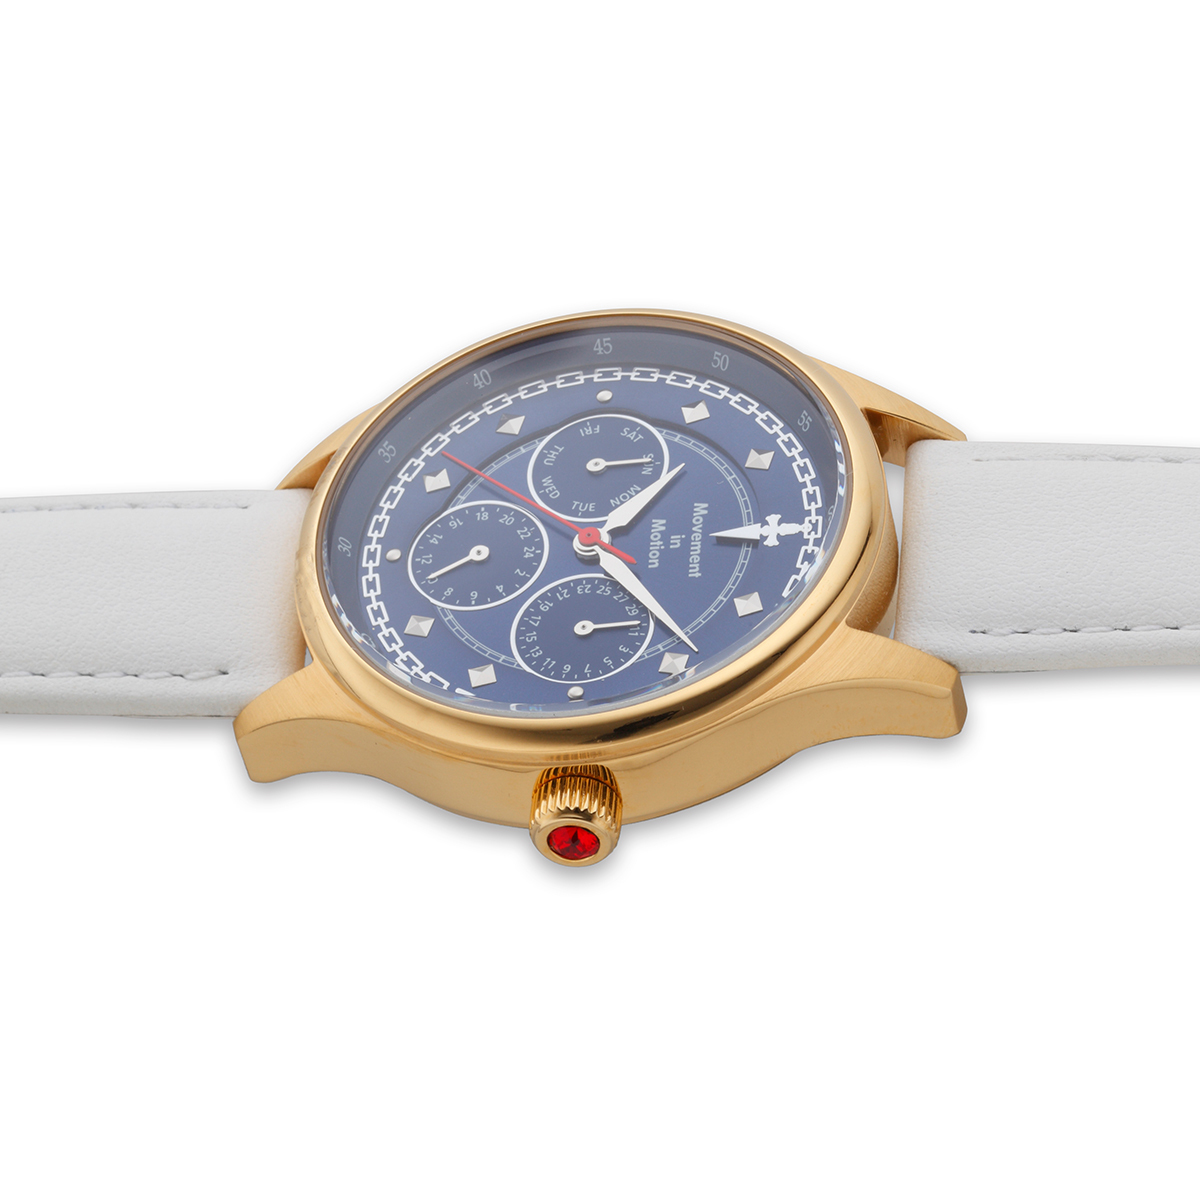 HUNTER × HUNTER TiCTAC コラボ腕時計 キルア - 時計